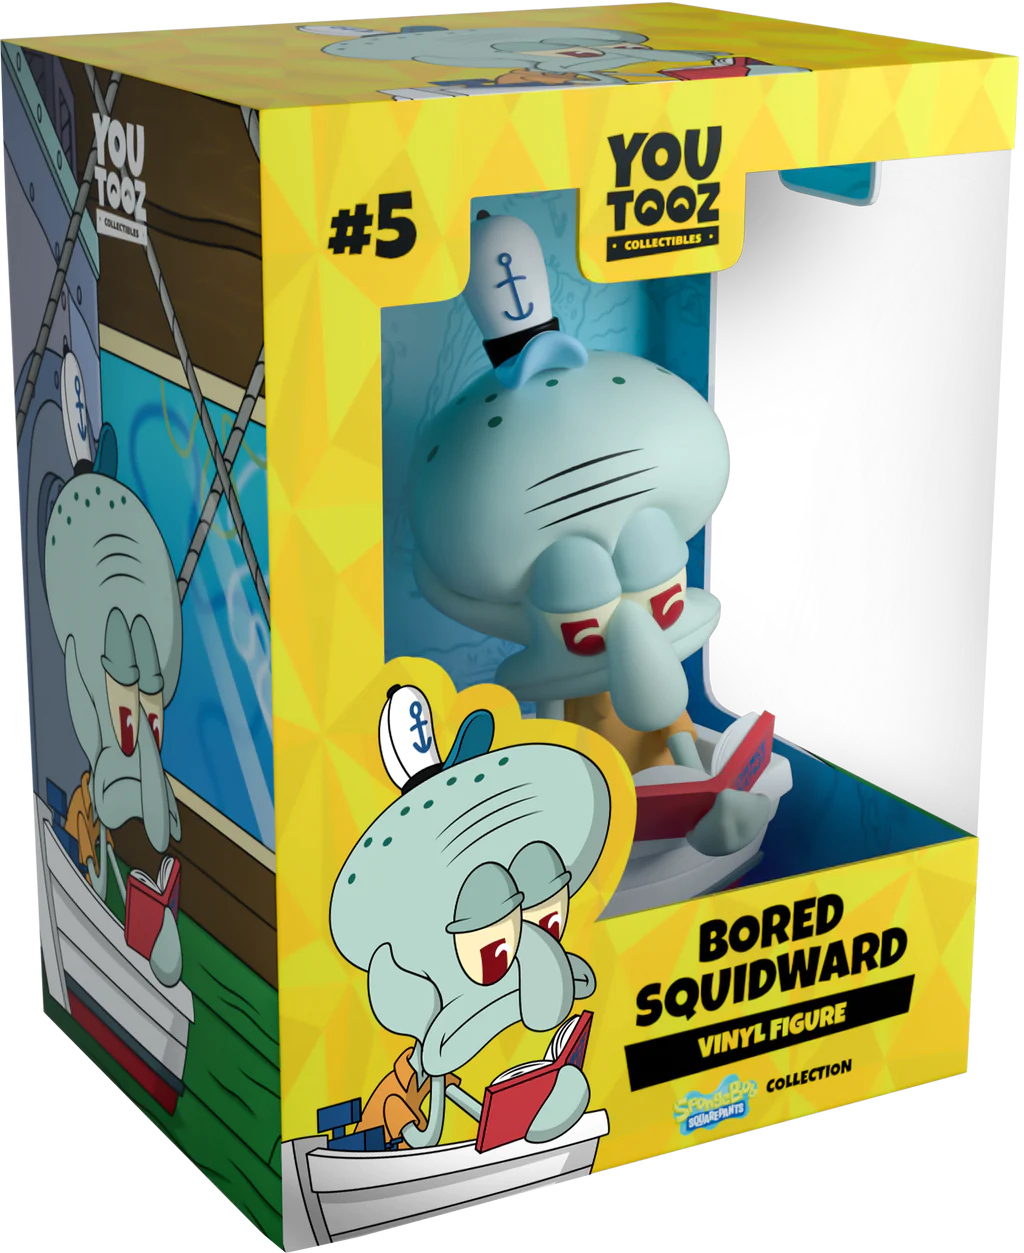 Spongebob Squarepants Board Squidward Youtooz Vinyl Figure